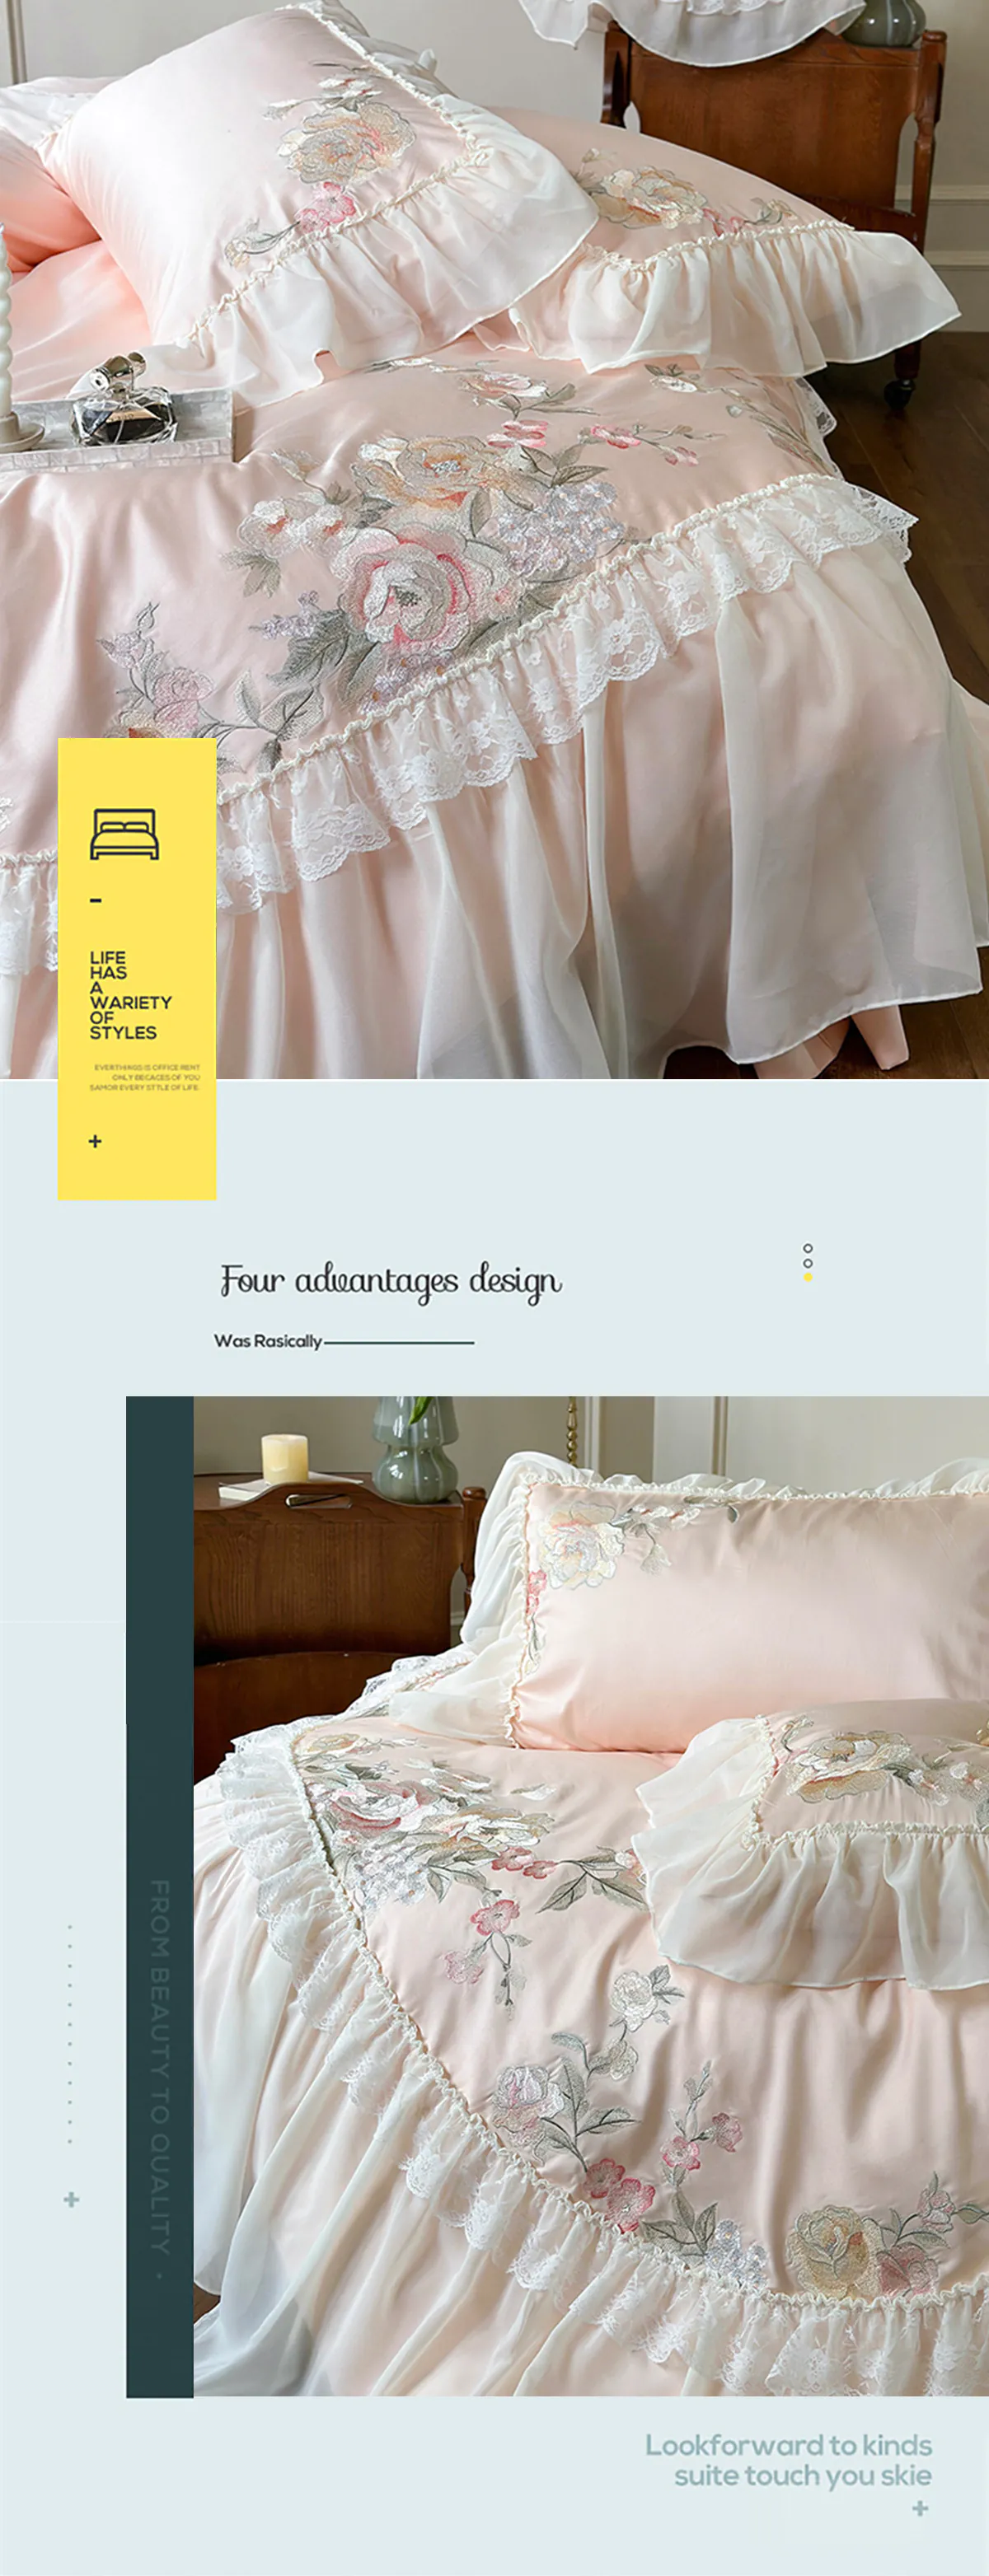 Luxury-Long-Staple-Cotton-Embroidery-Ruffle-Lace-Trim-Bedding-Set22